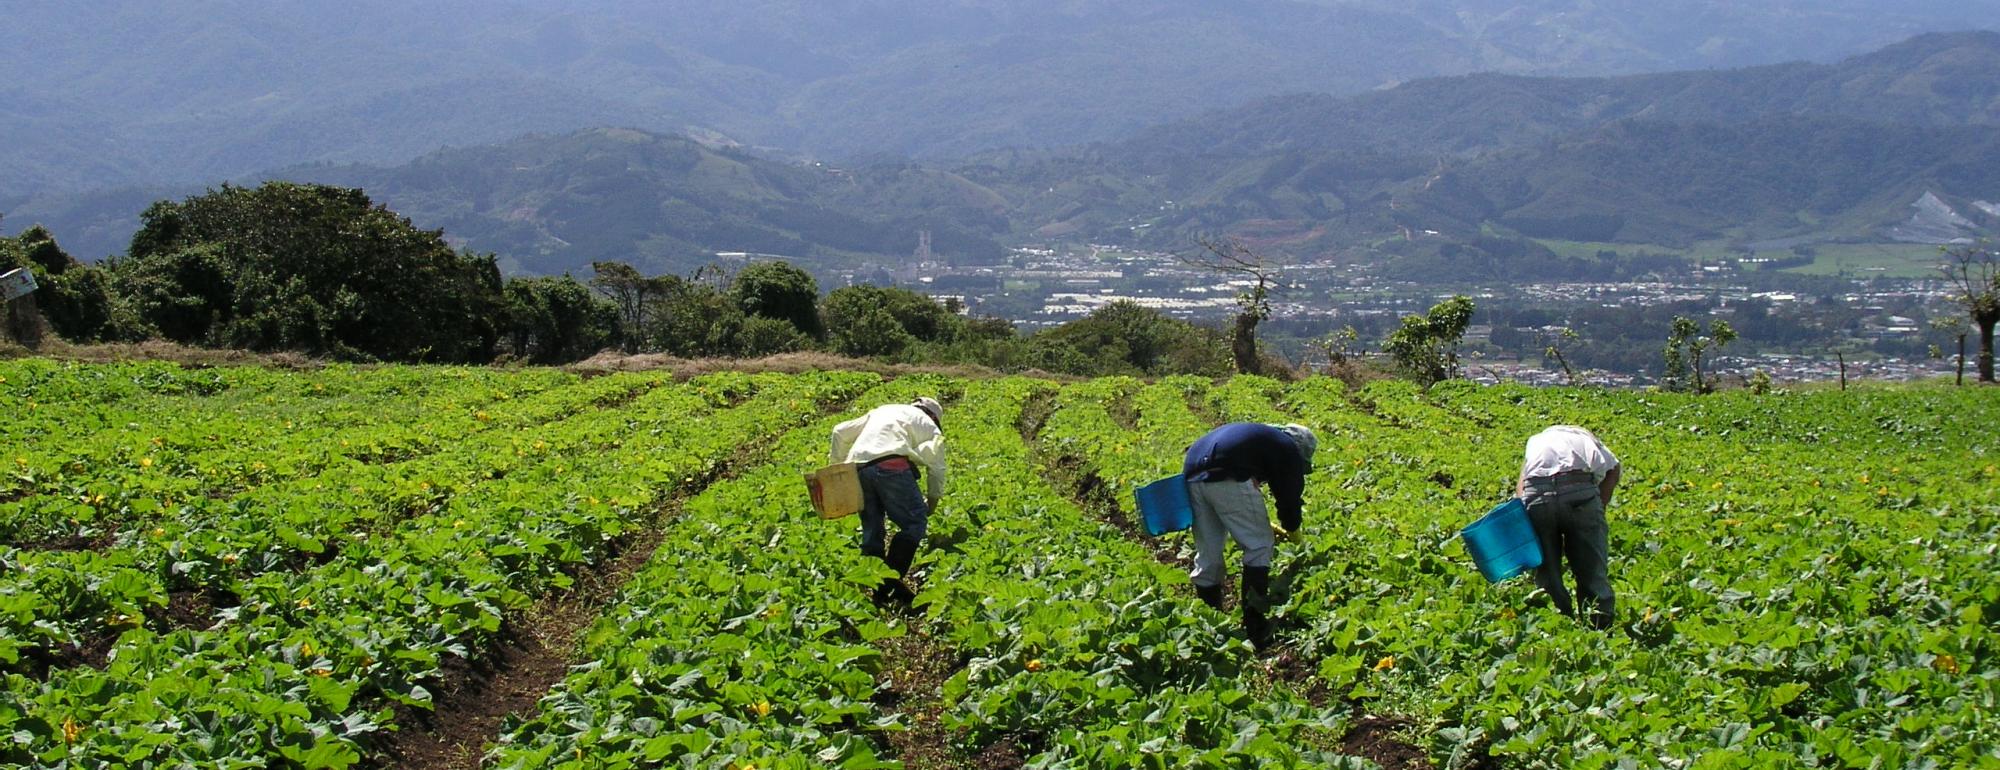 Farmworkers harvesting summer squash in Costa Rica